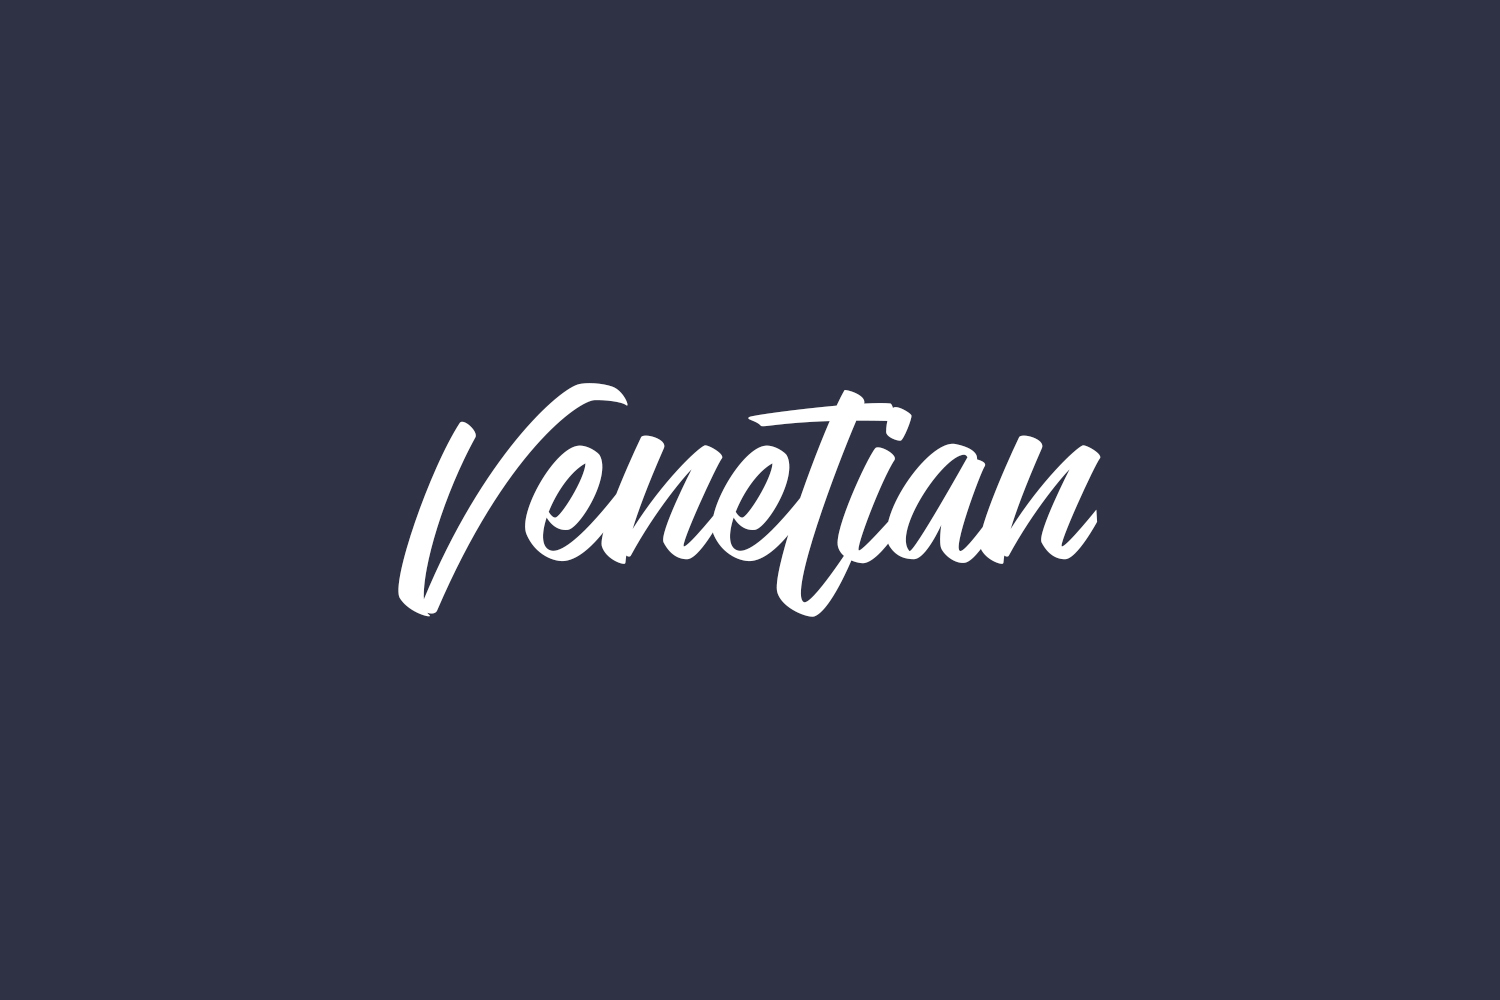 Venetian Free Font